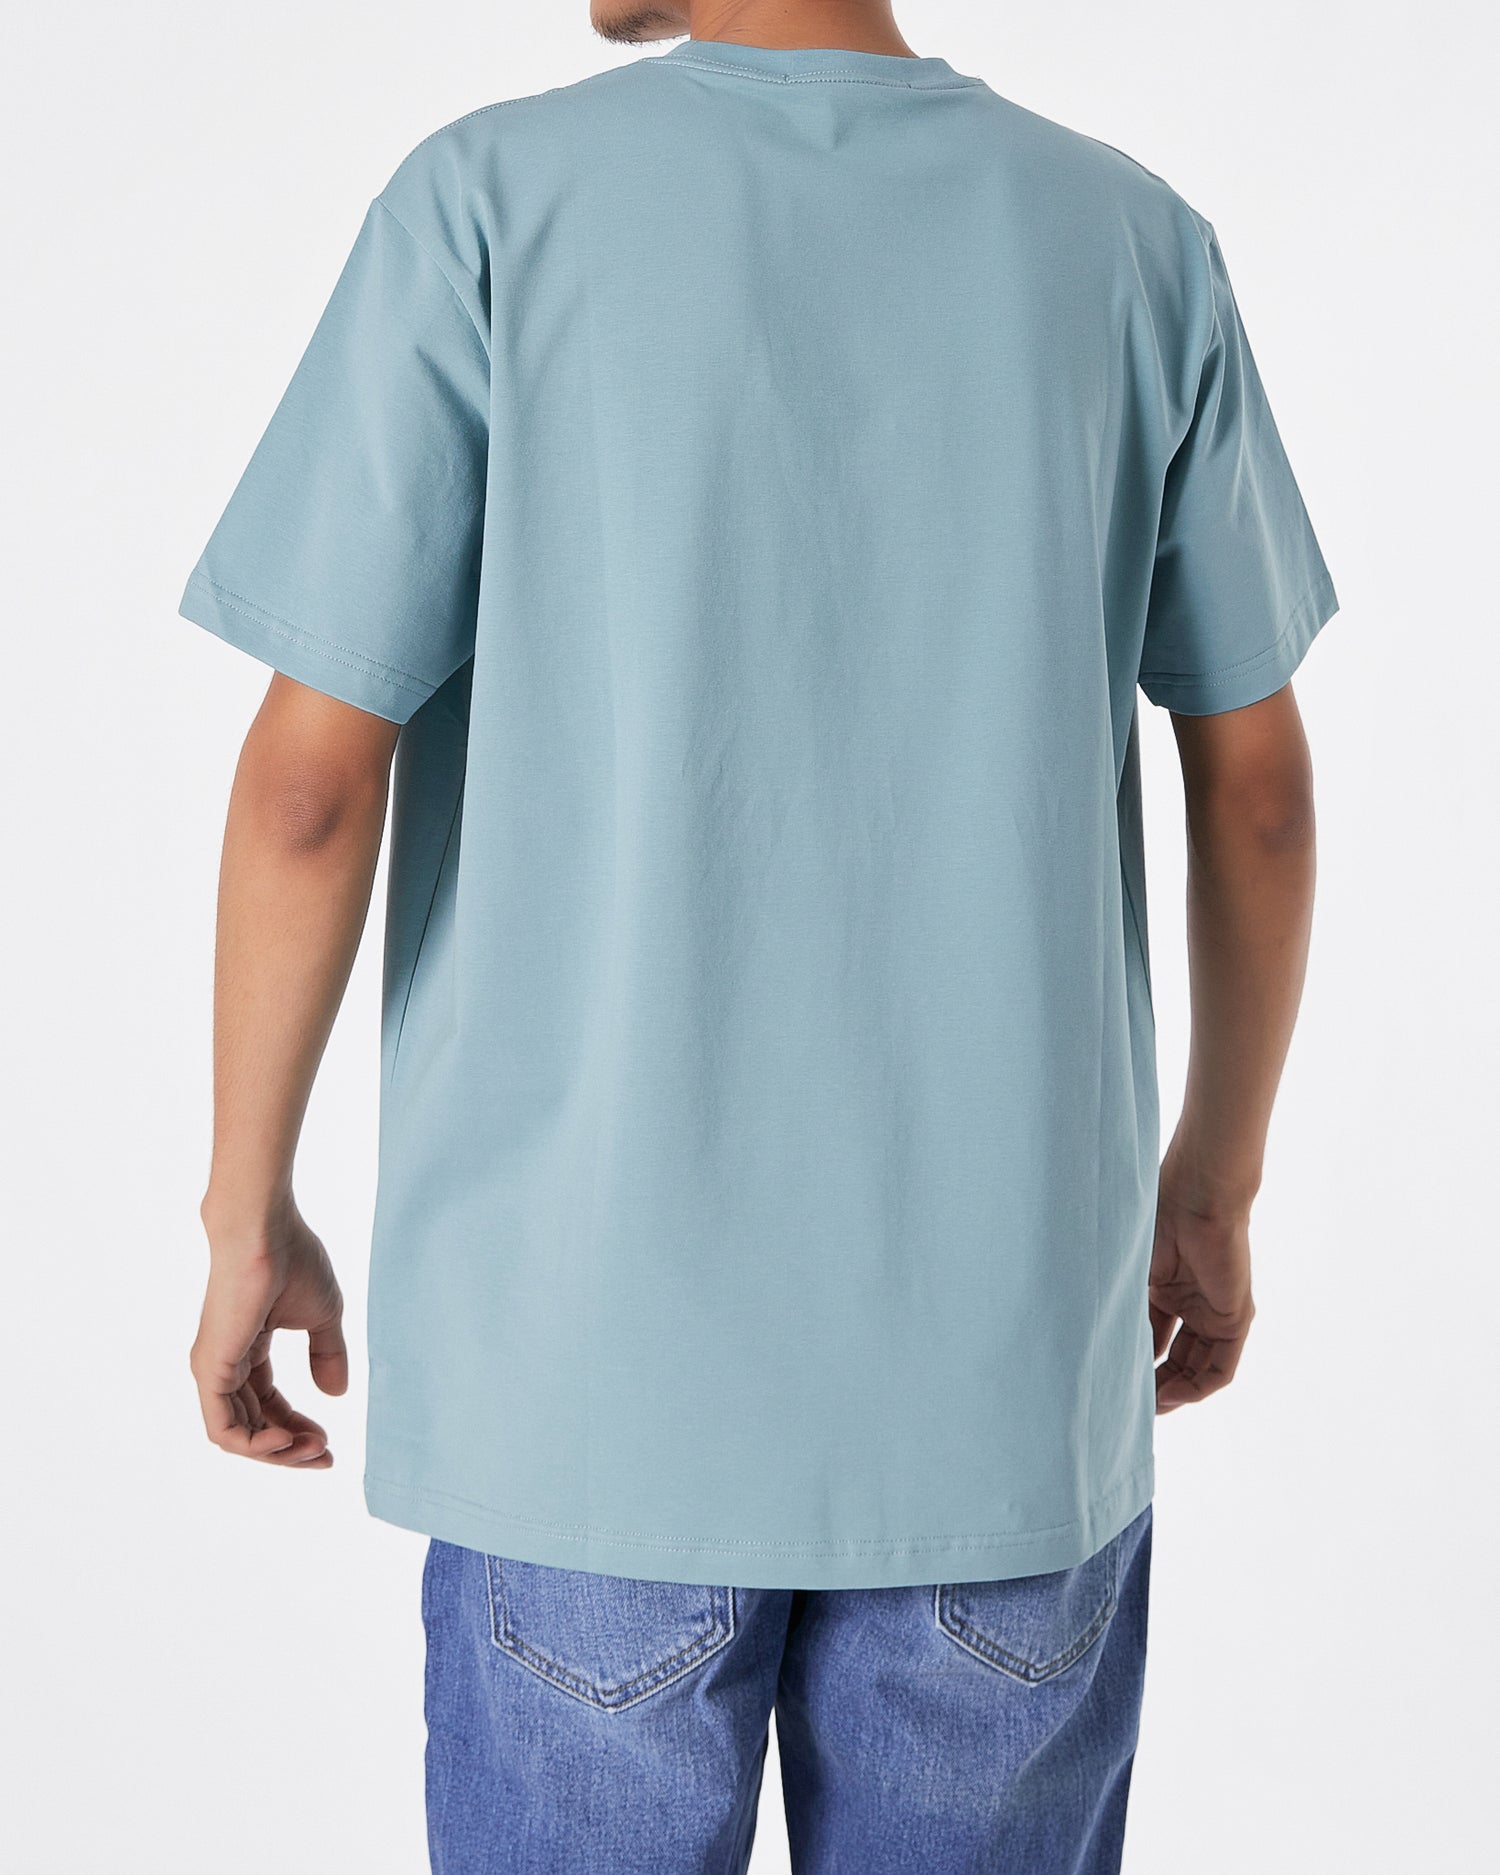 TH Logo Printed Men Light Blue T-Shirt 14.90